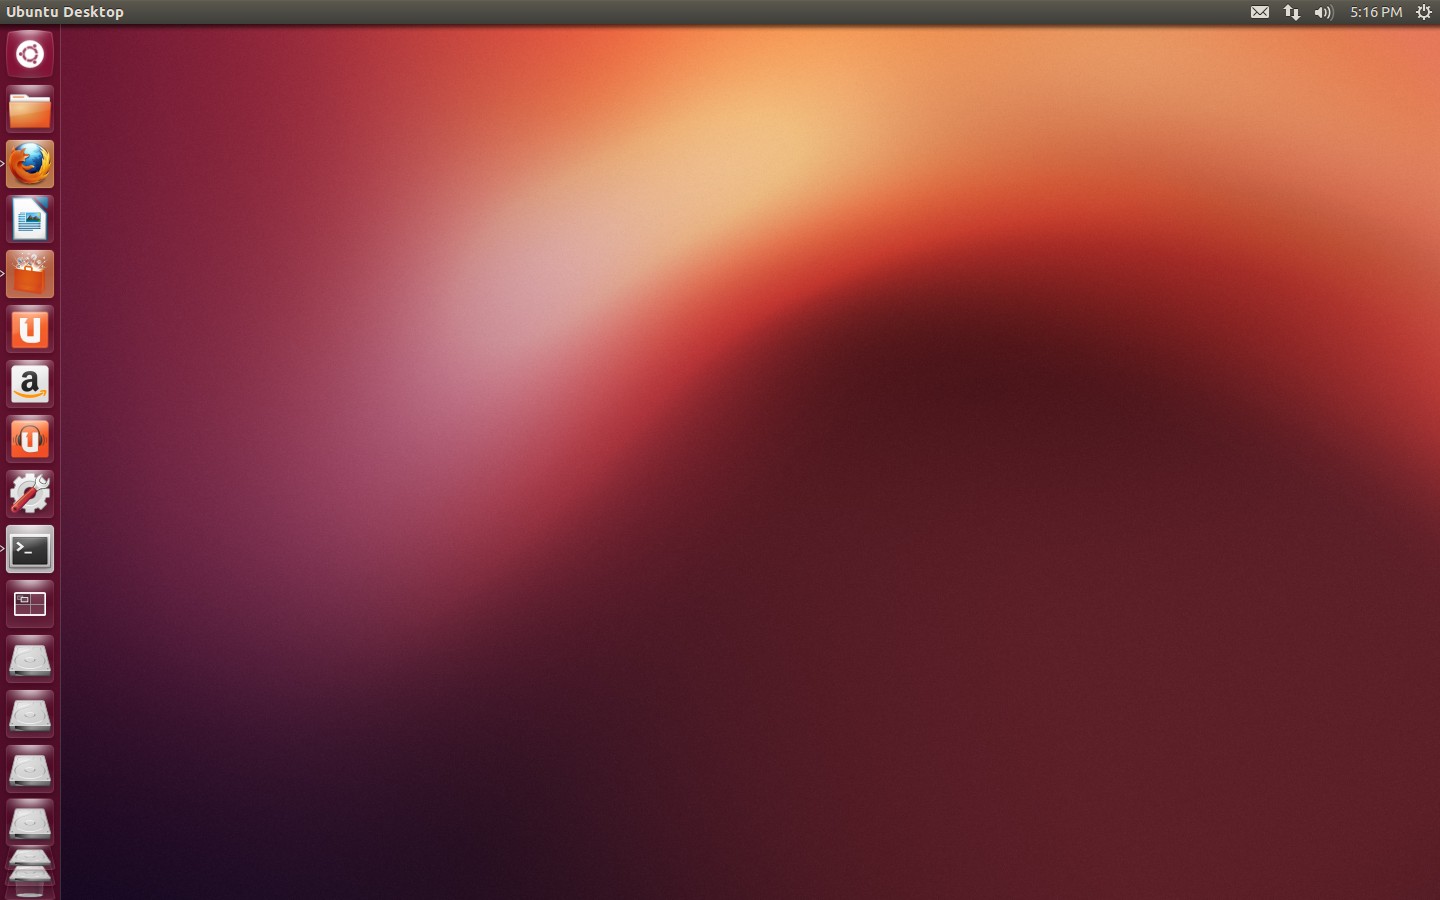 Guvcview Ubuntu 12.10